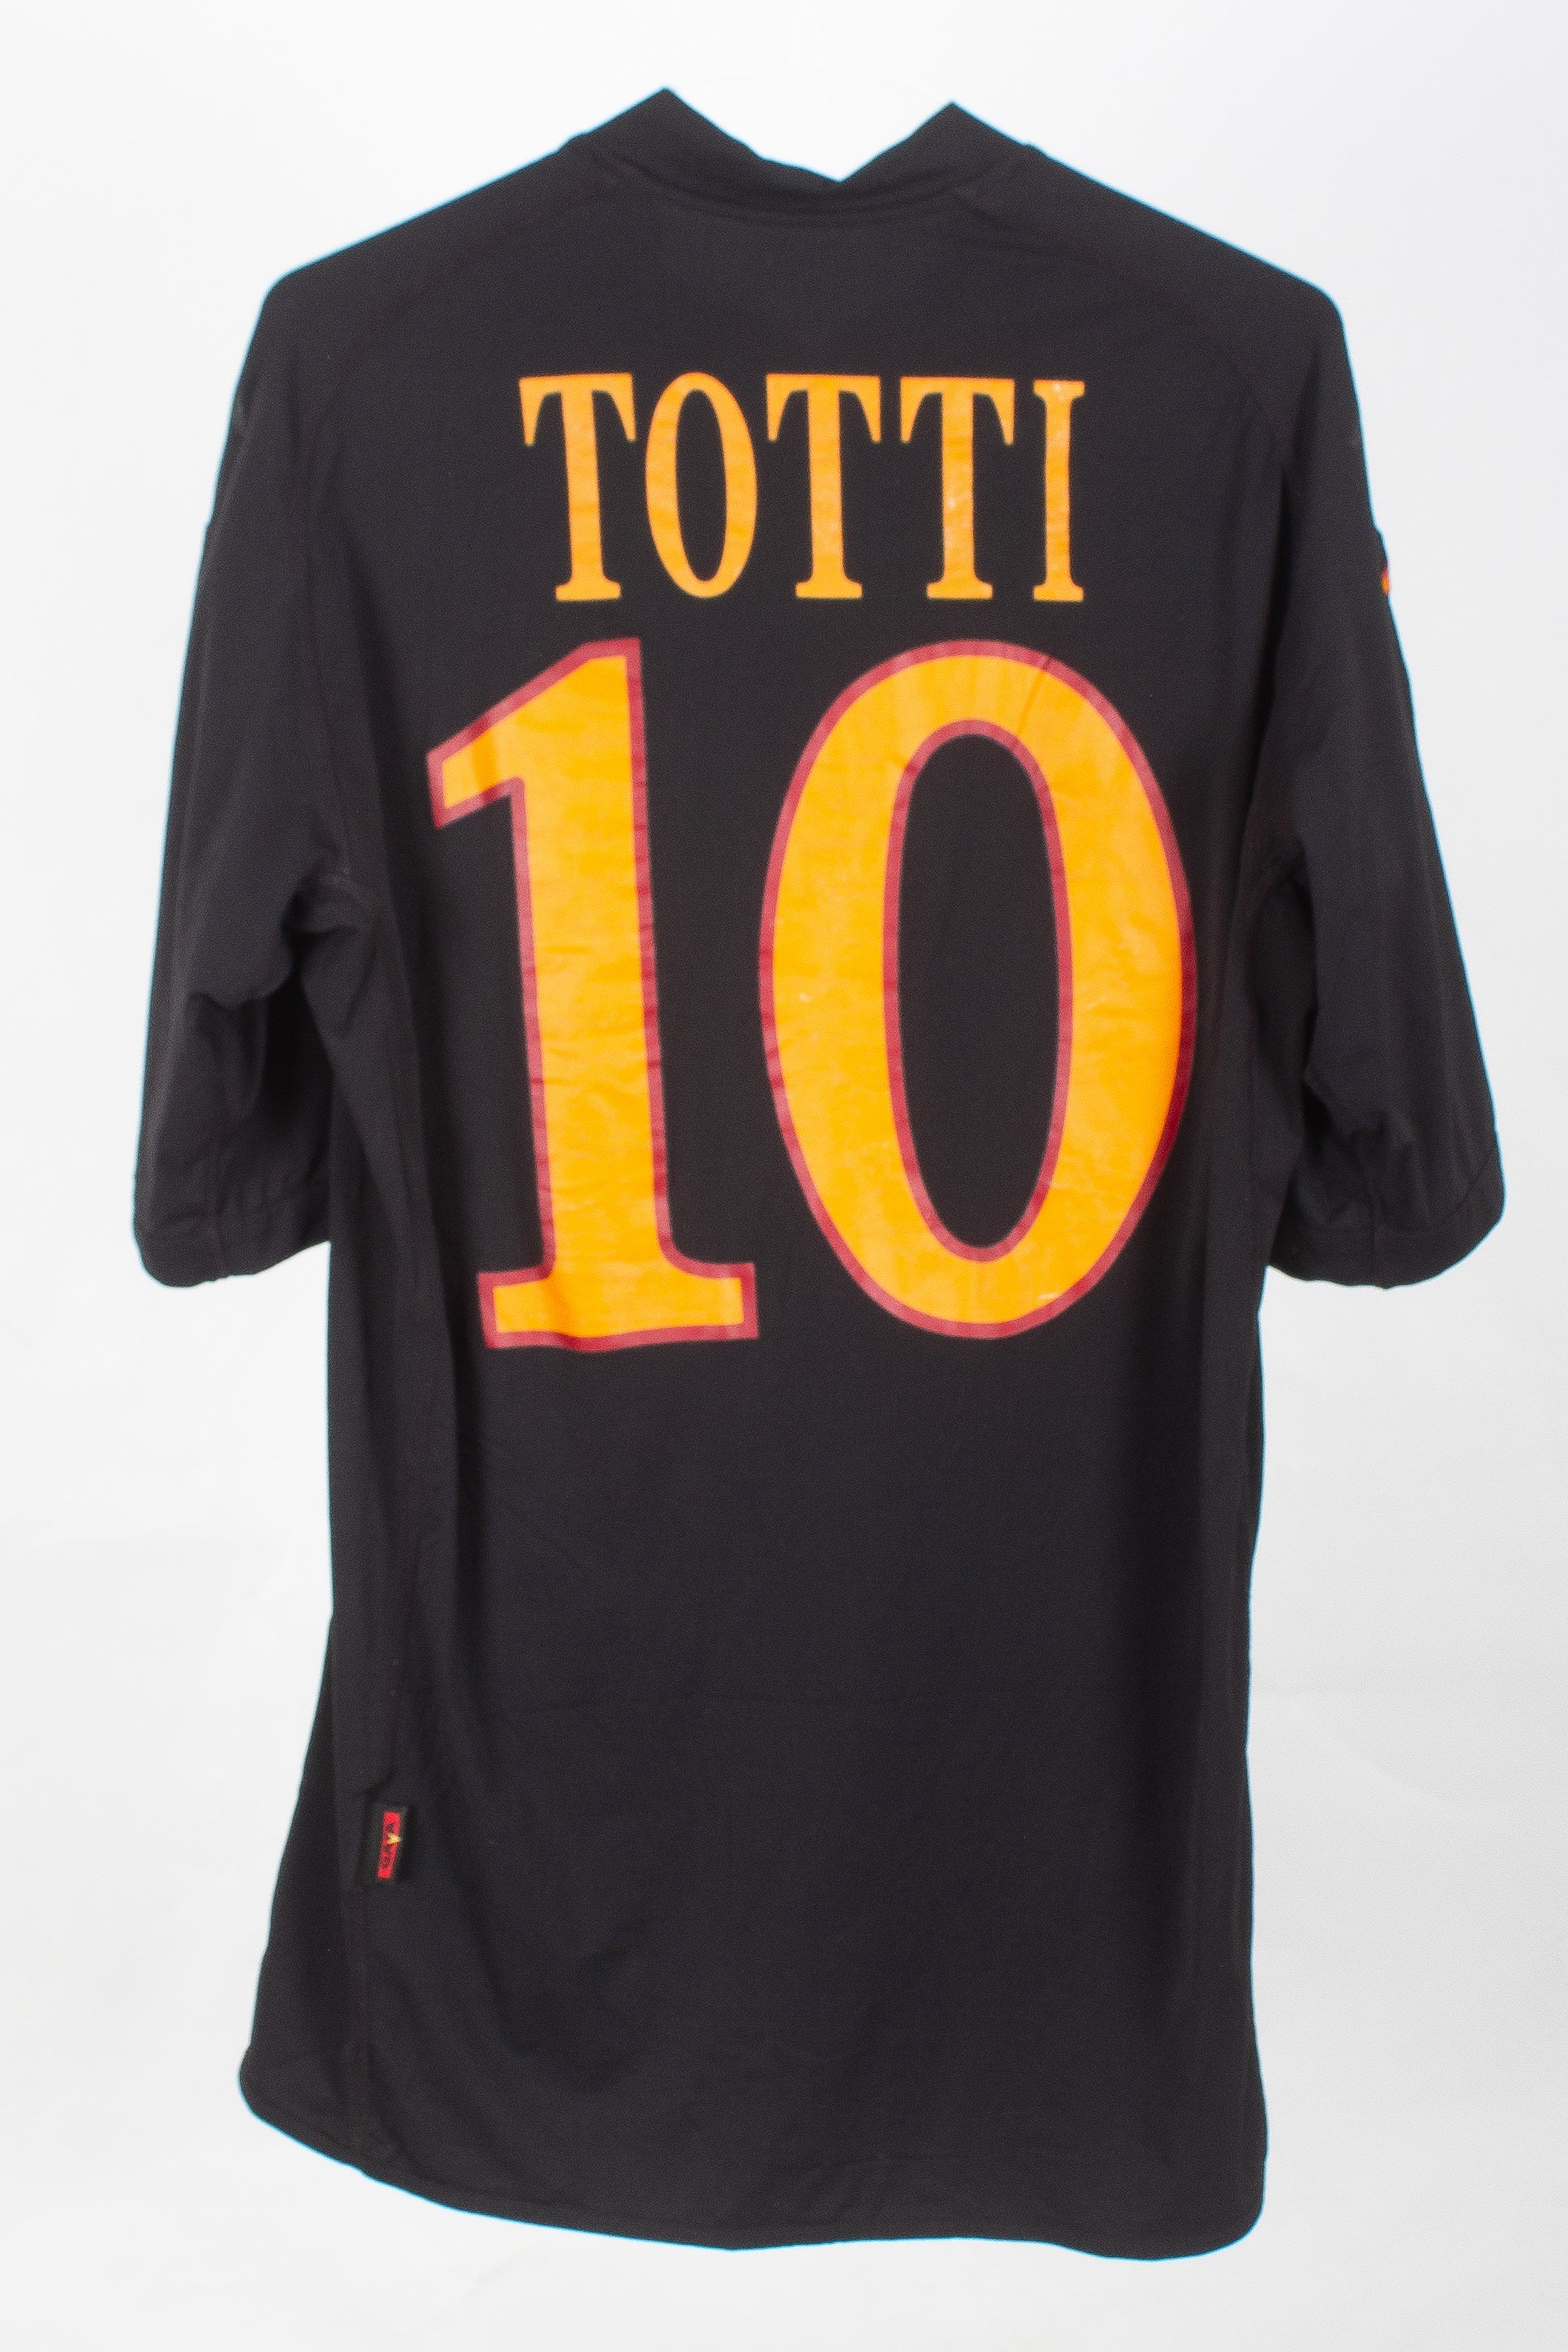 AS Roma 2009/10 Third Shirt (Totti #10) (M)